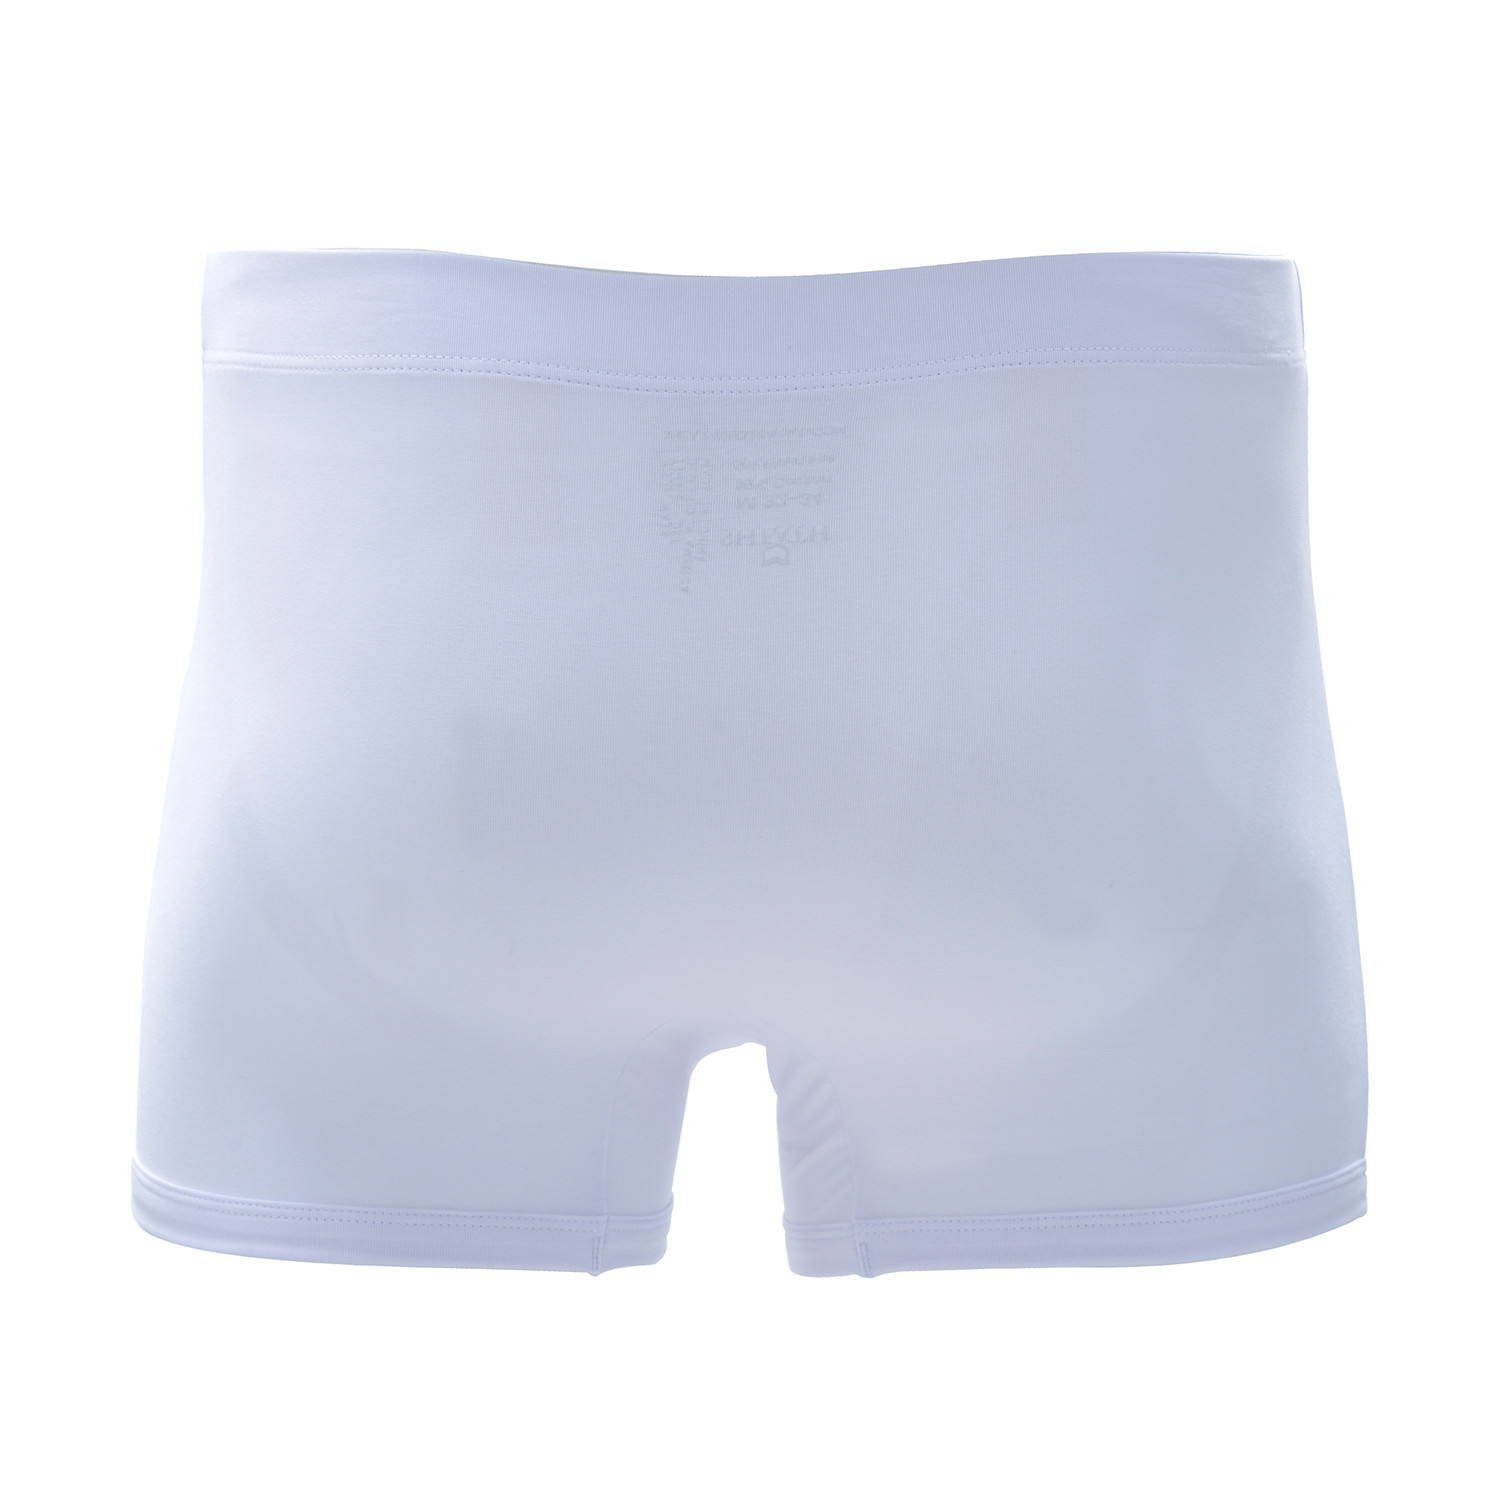 Sheath 2.0 // White Lotus (Small) - Sheath Underwear - Touch of Modern